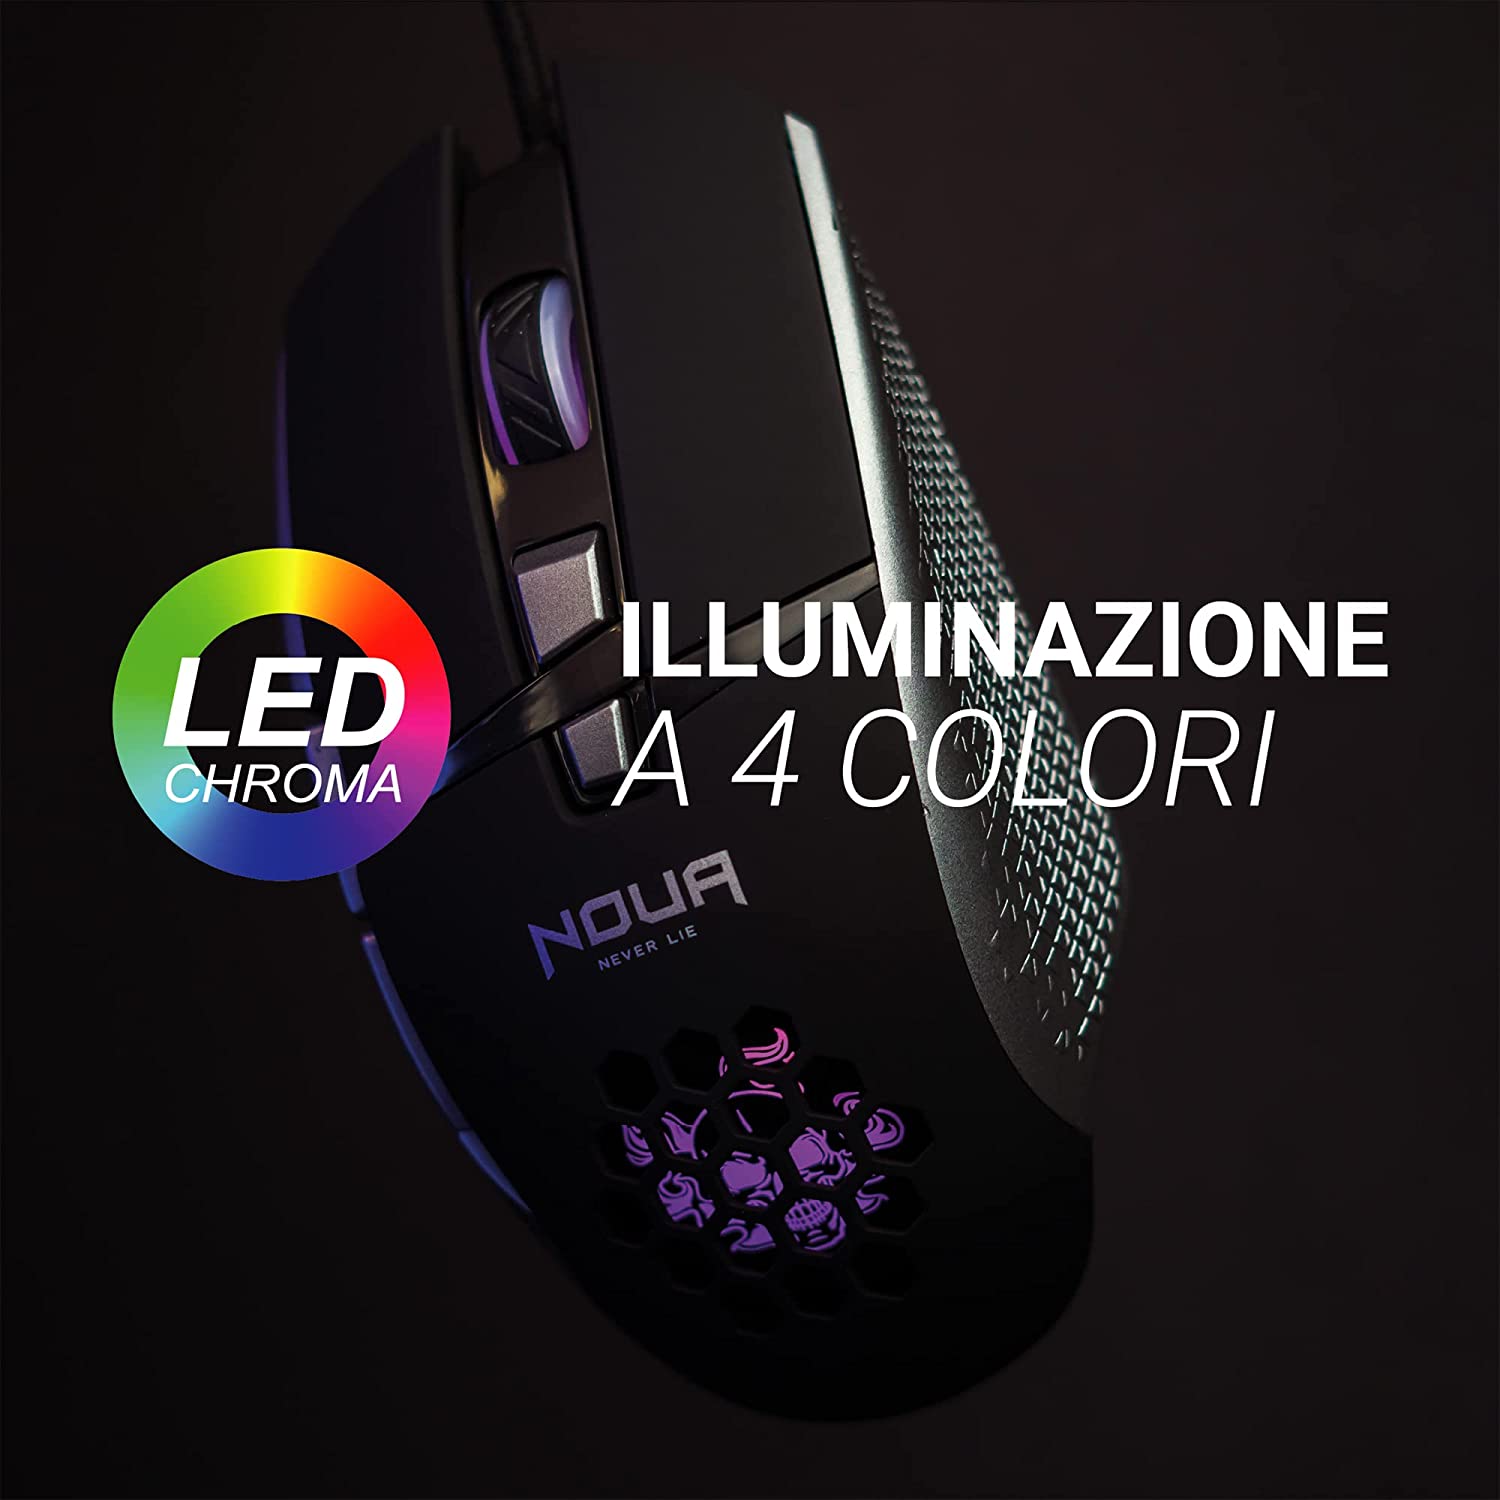 MOUSE NOUA Usb Gaming Roka Illuminazione Led a 4 Colori Instant 704 8 Tasti 7200DPI Regolabili